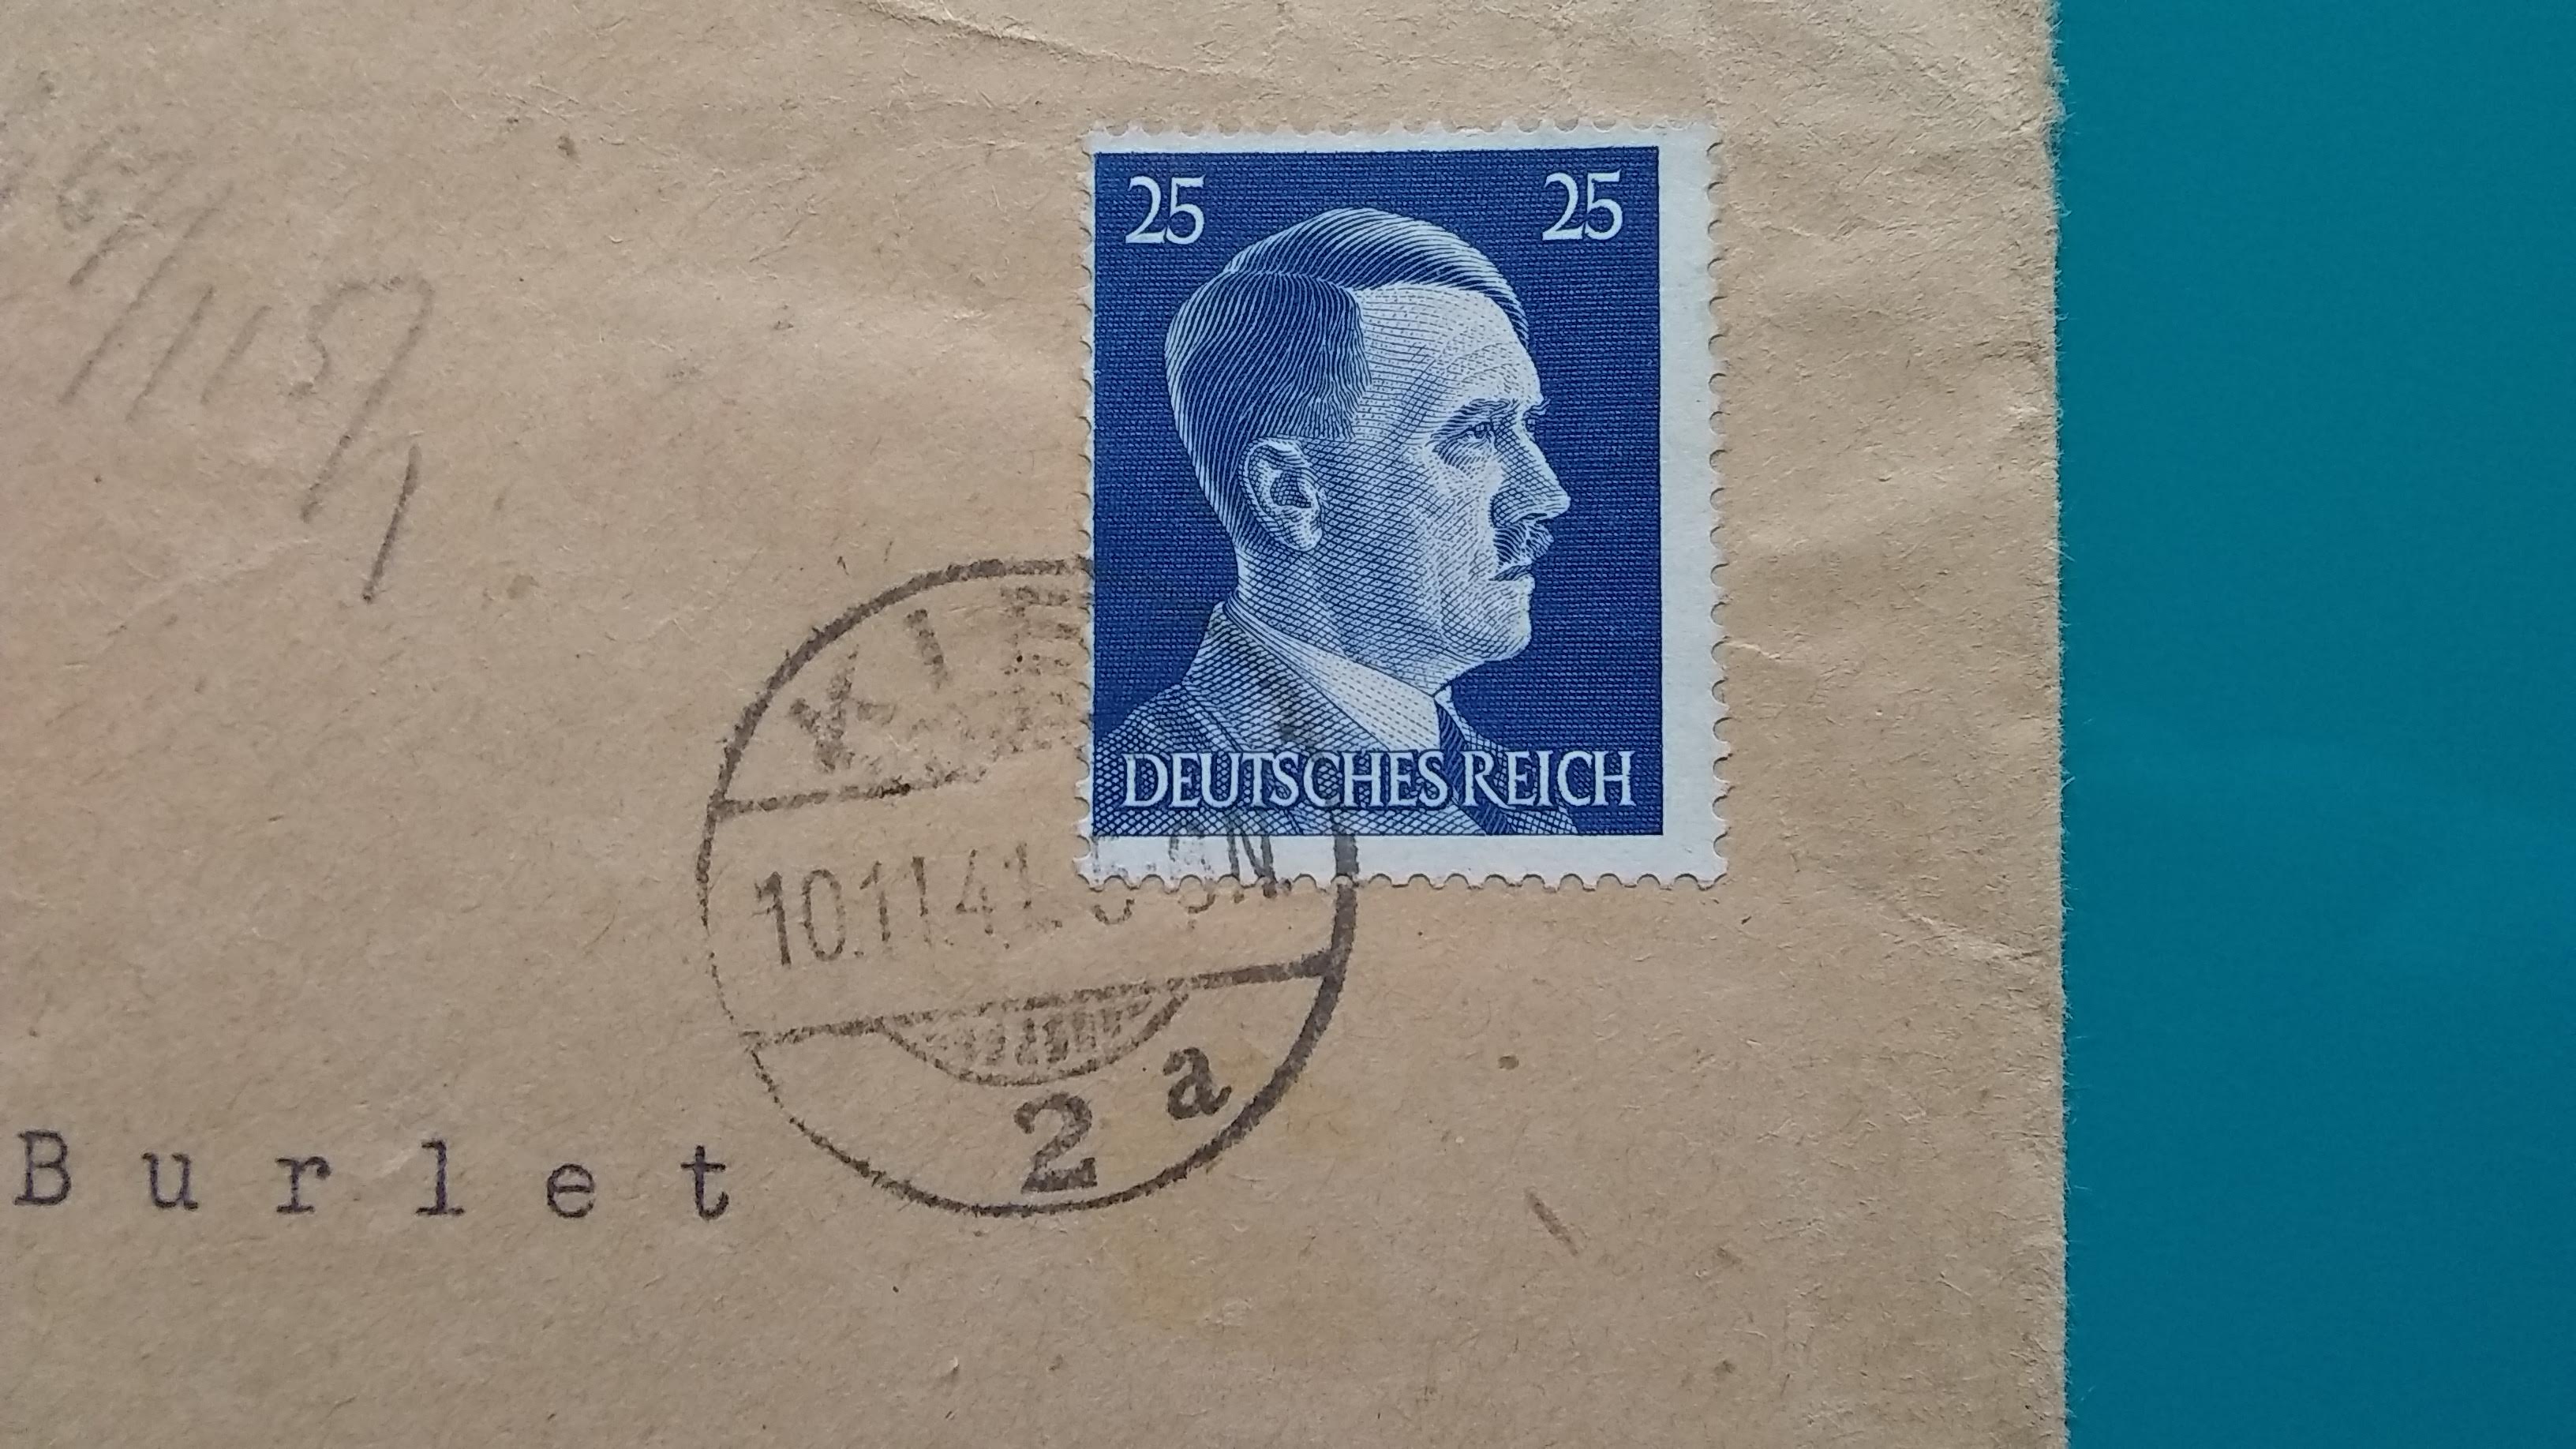 Stamp with portrait of Adolf Hitler